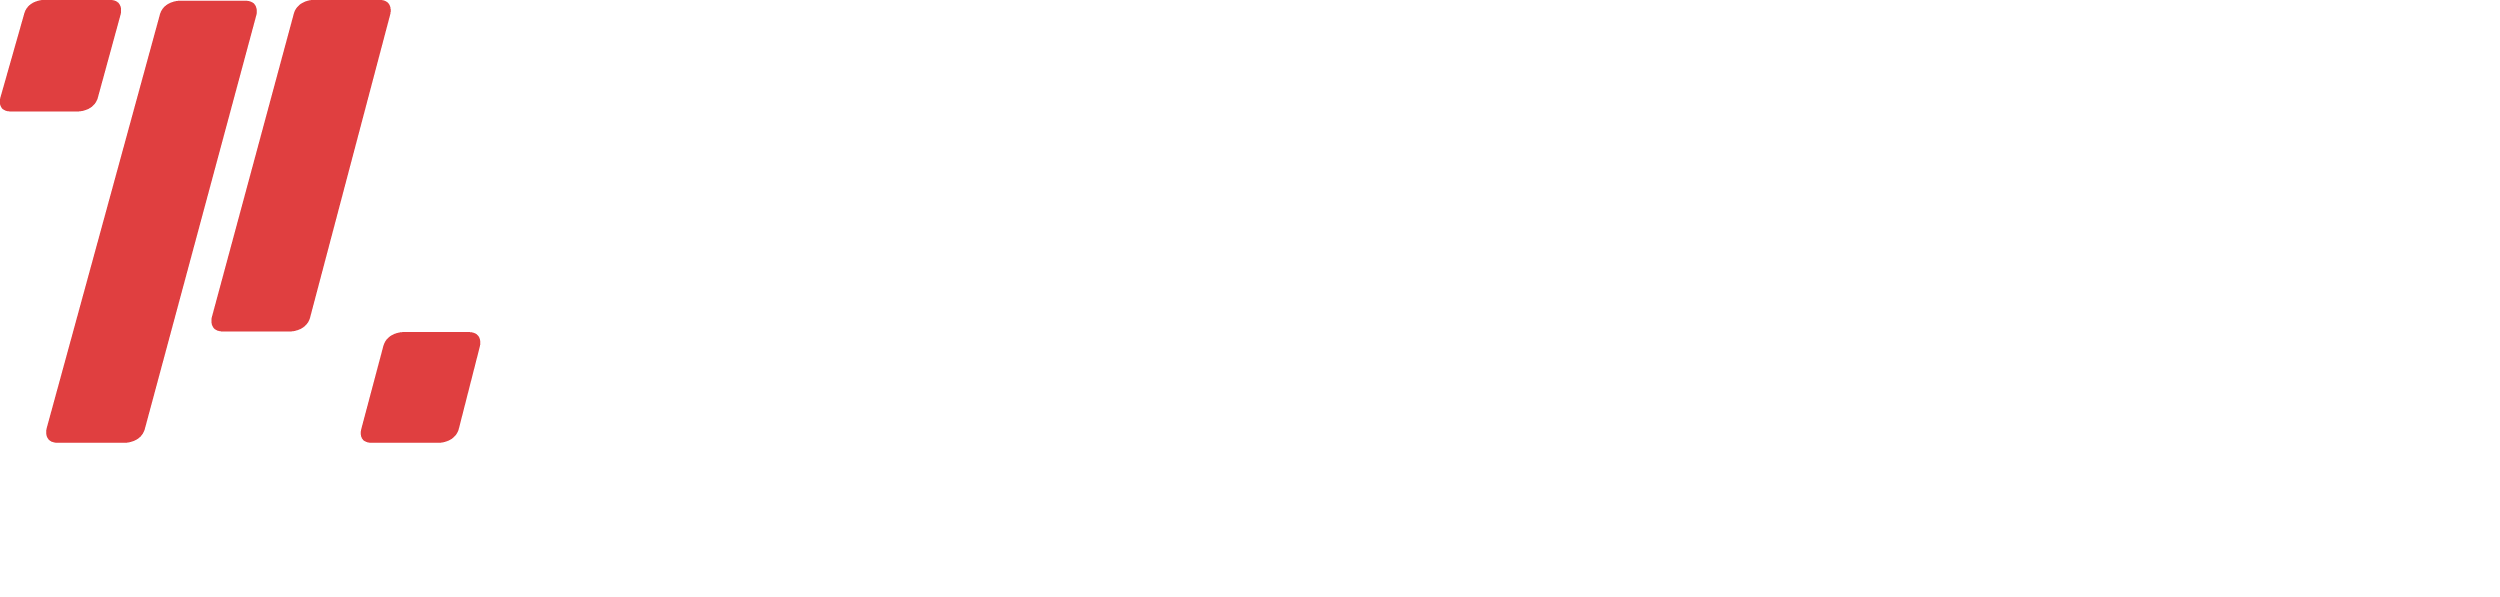 ThinkLab logo